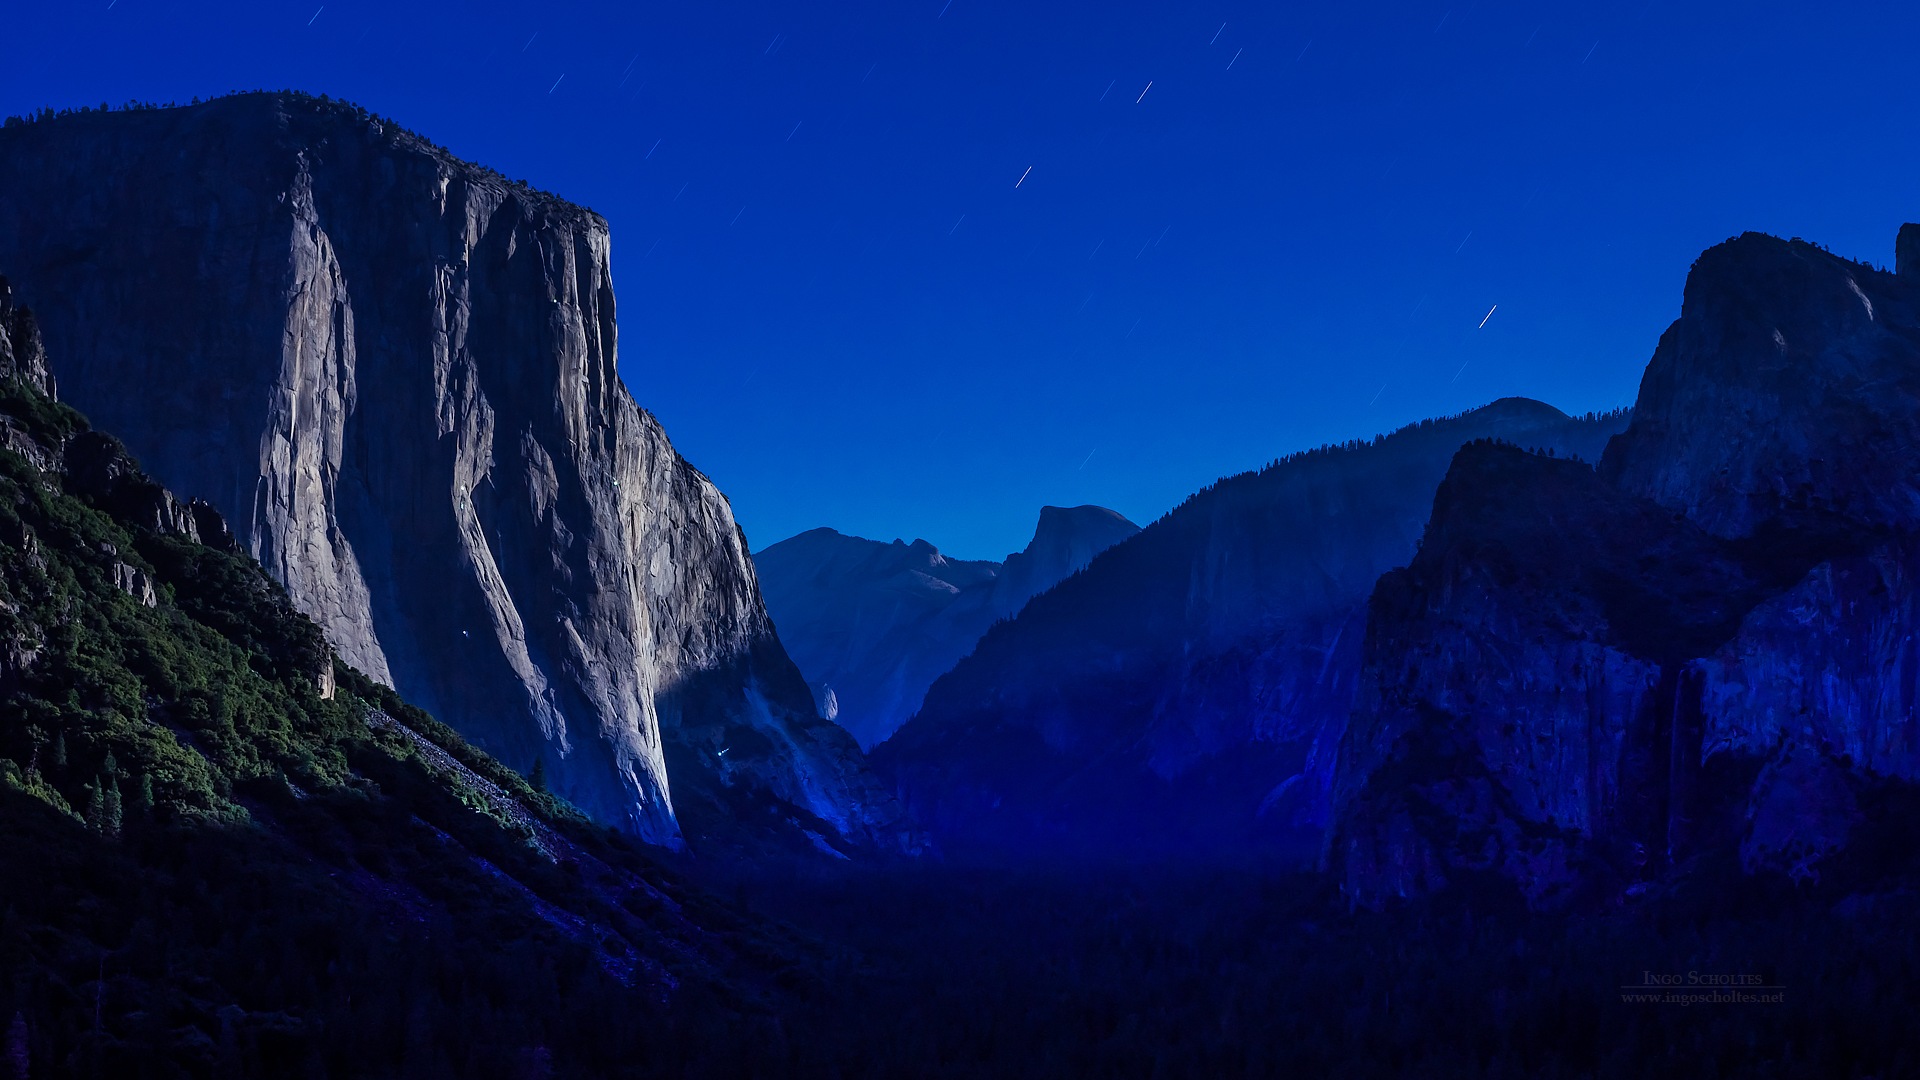 Windows 8 theme, Yosemite National Park HD wallpapers #14 - 1920x1080